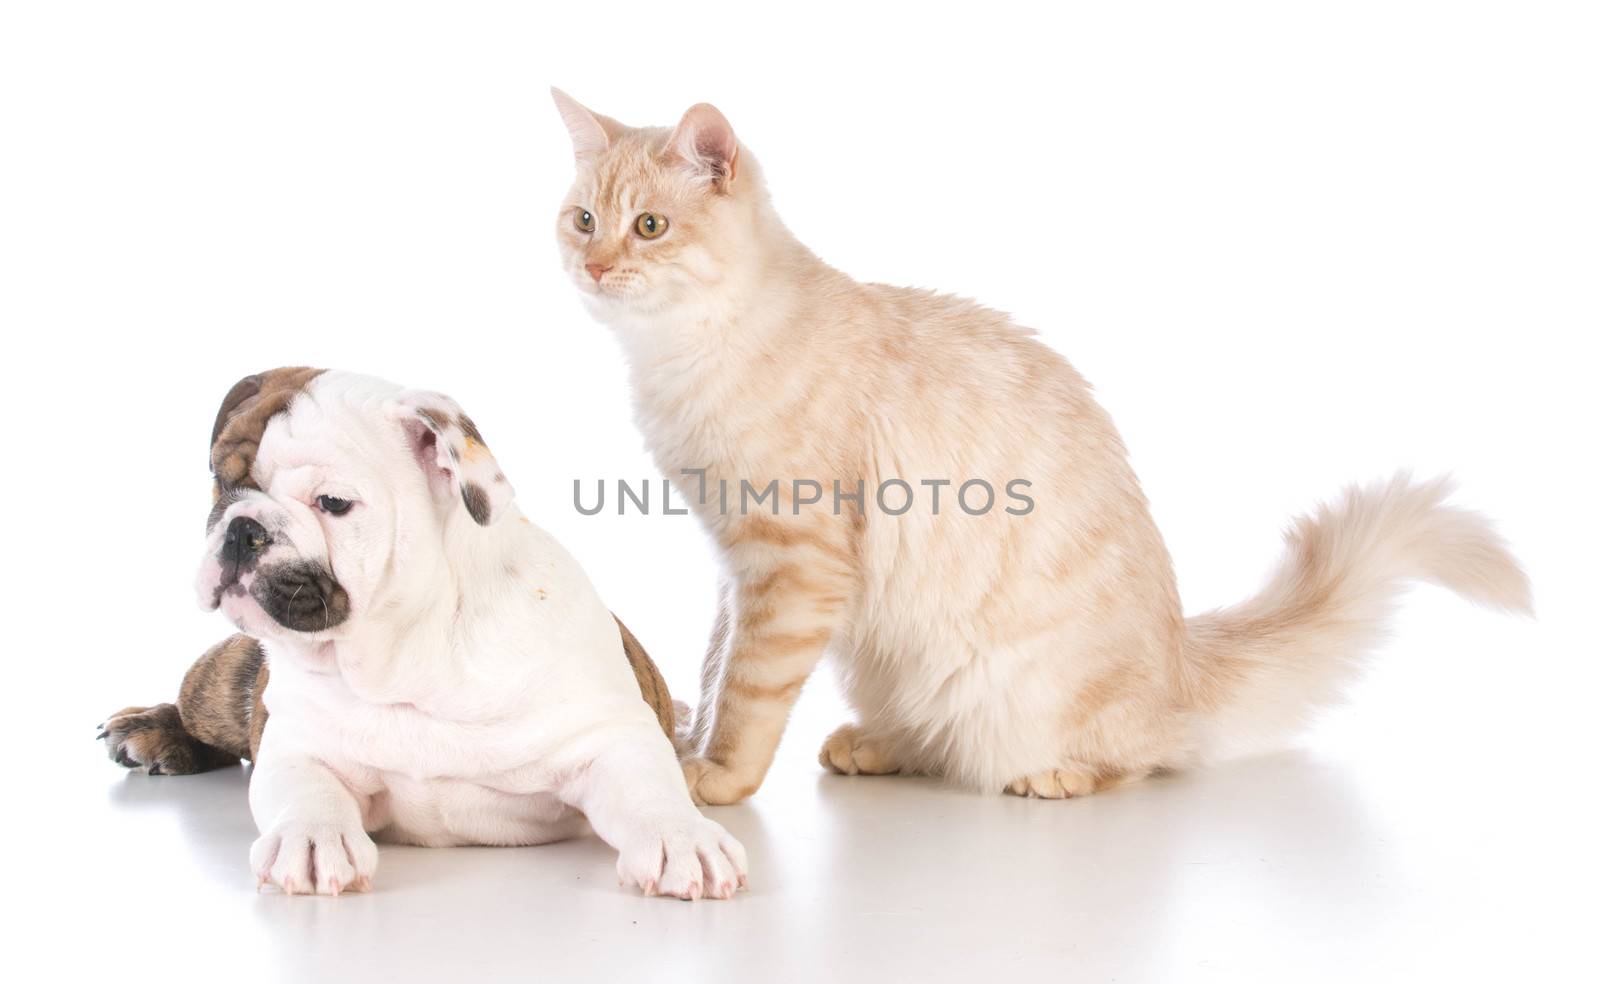 dog and cat isolated on white background